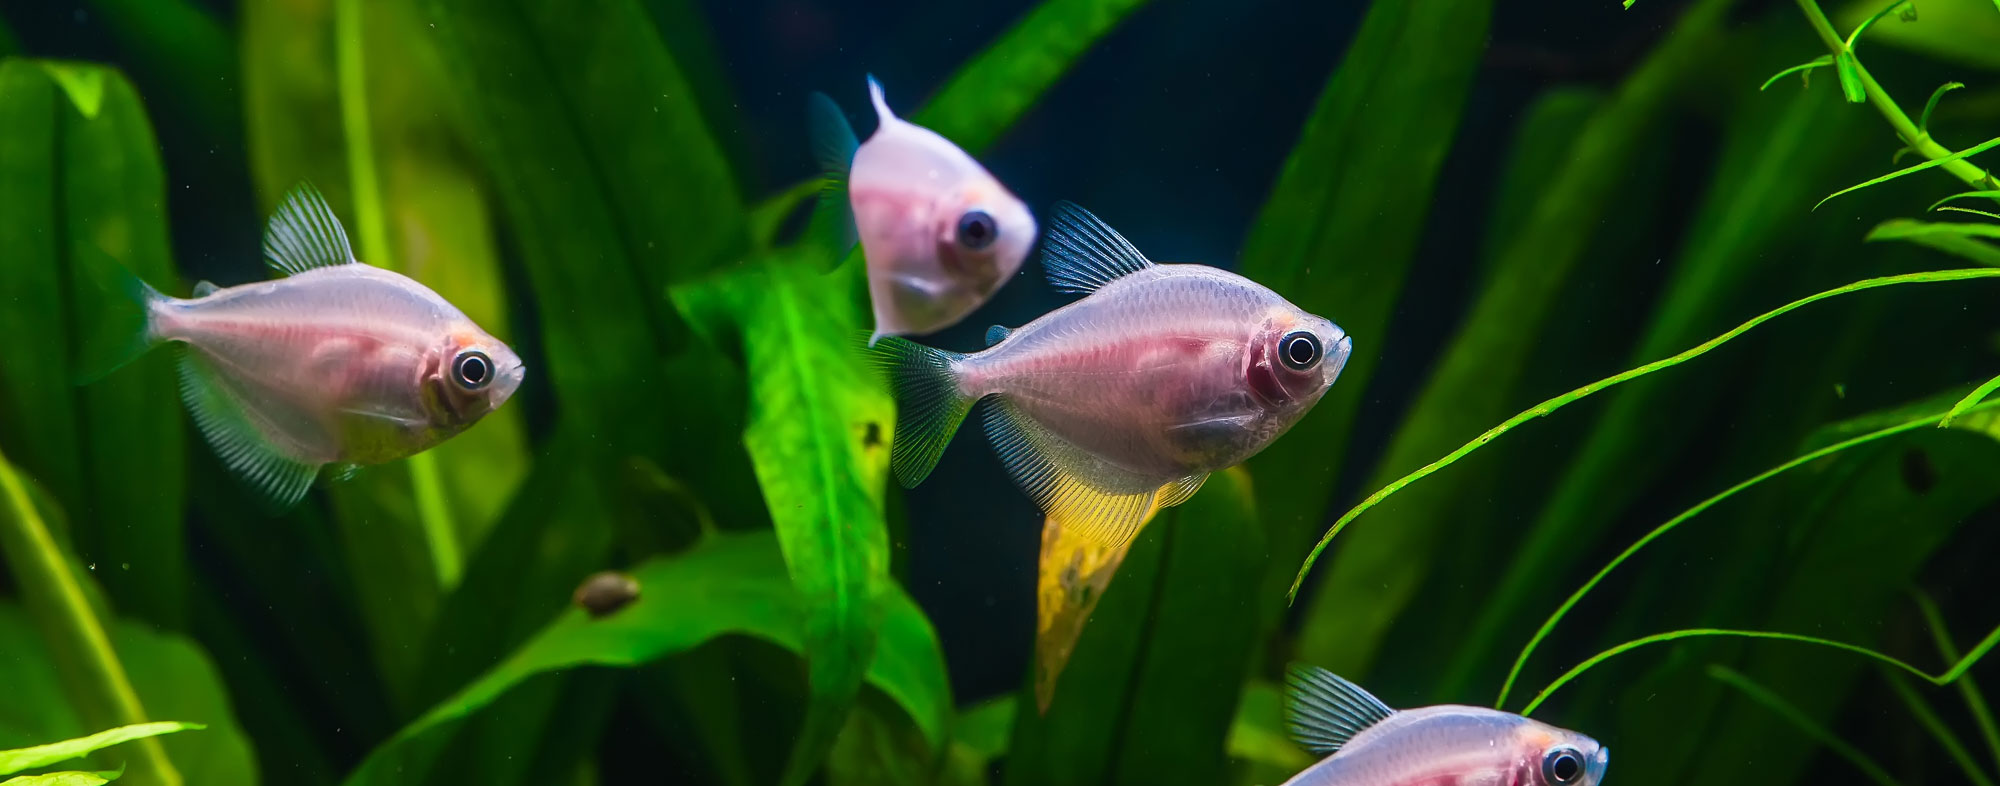 A group of small purplish fish swimming in a freshwater aquarium